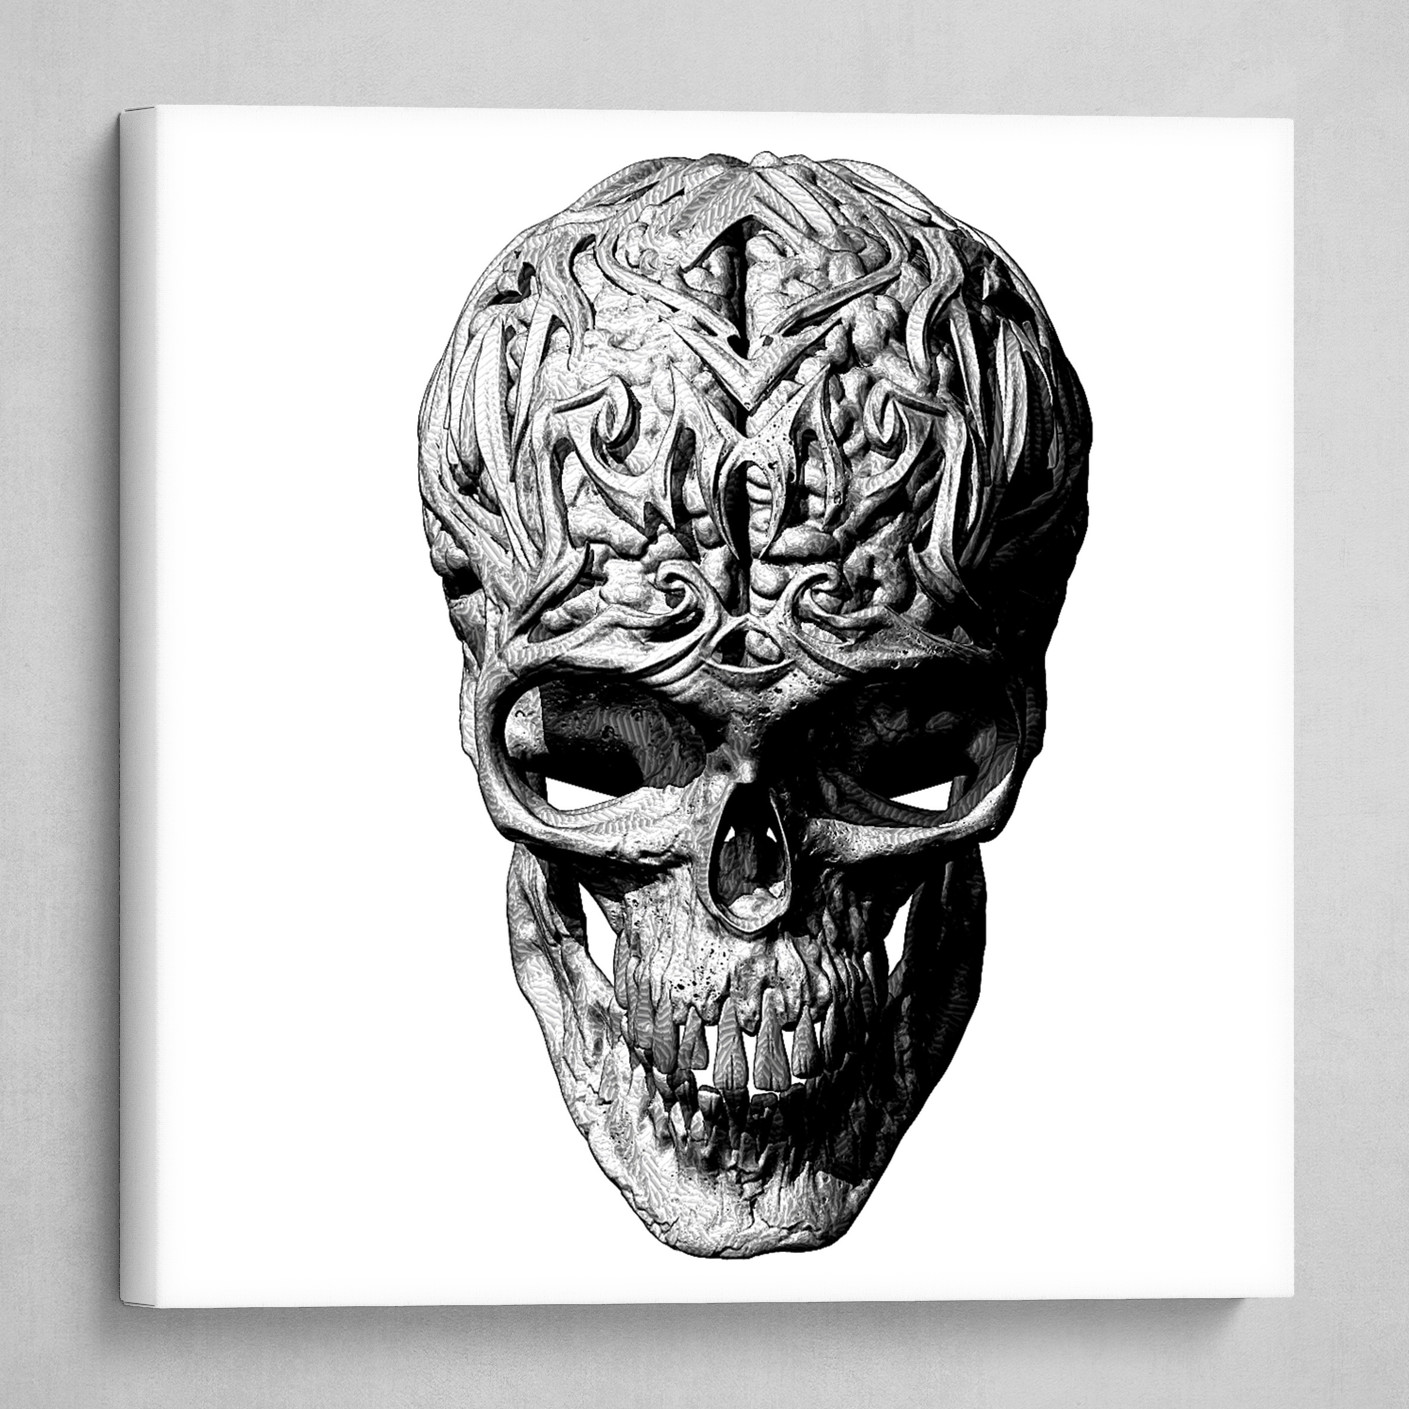 Skull with brain